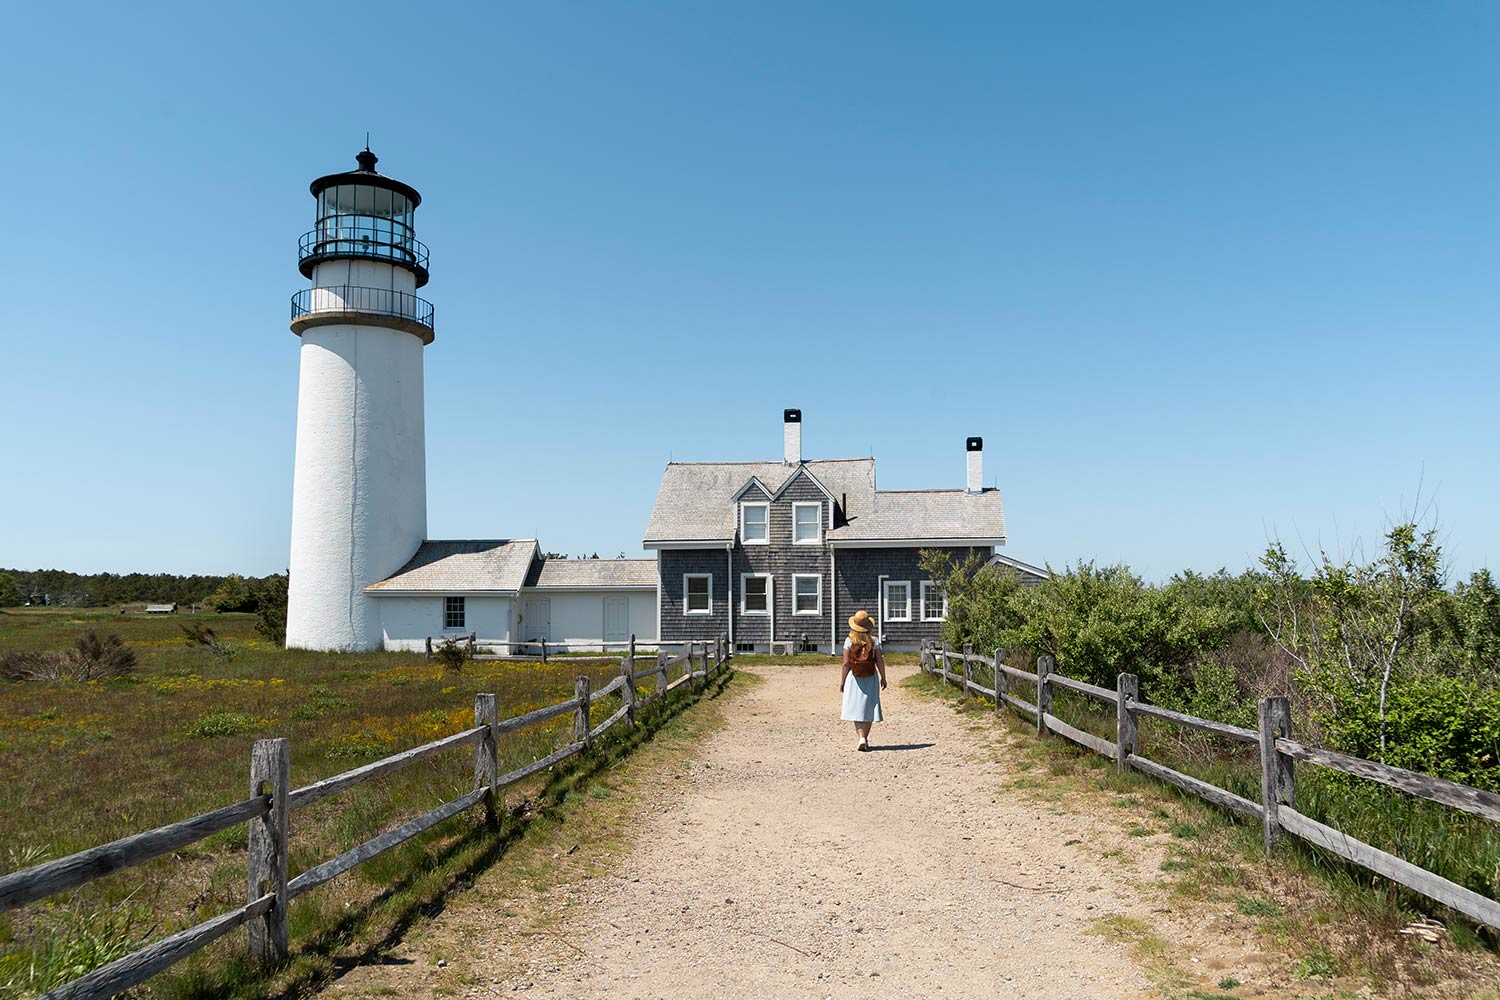 Phare Highland Lighthouse, Truro, Cape Cod, Massachusetts, États-Unis / Highland Lighthouse, Truro, Cape Cod, Massachusetts, USA